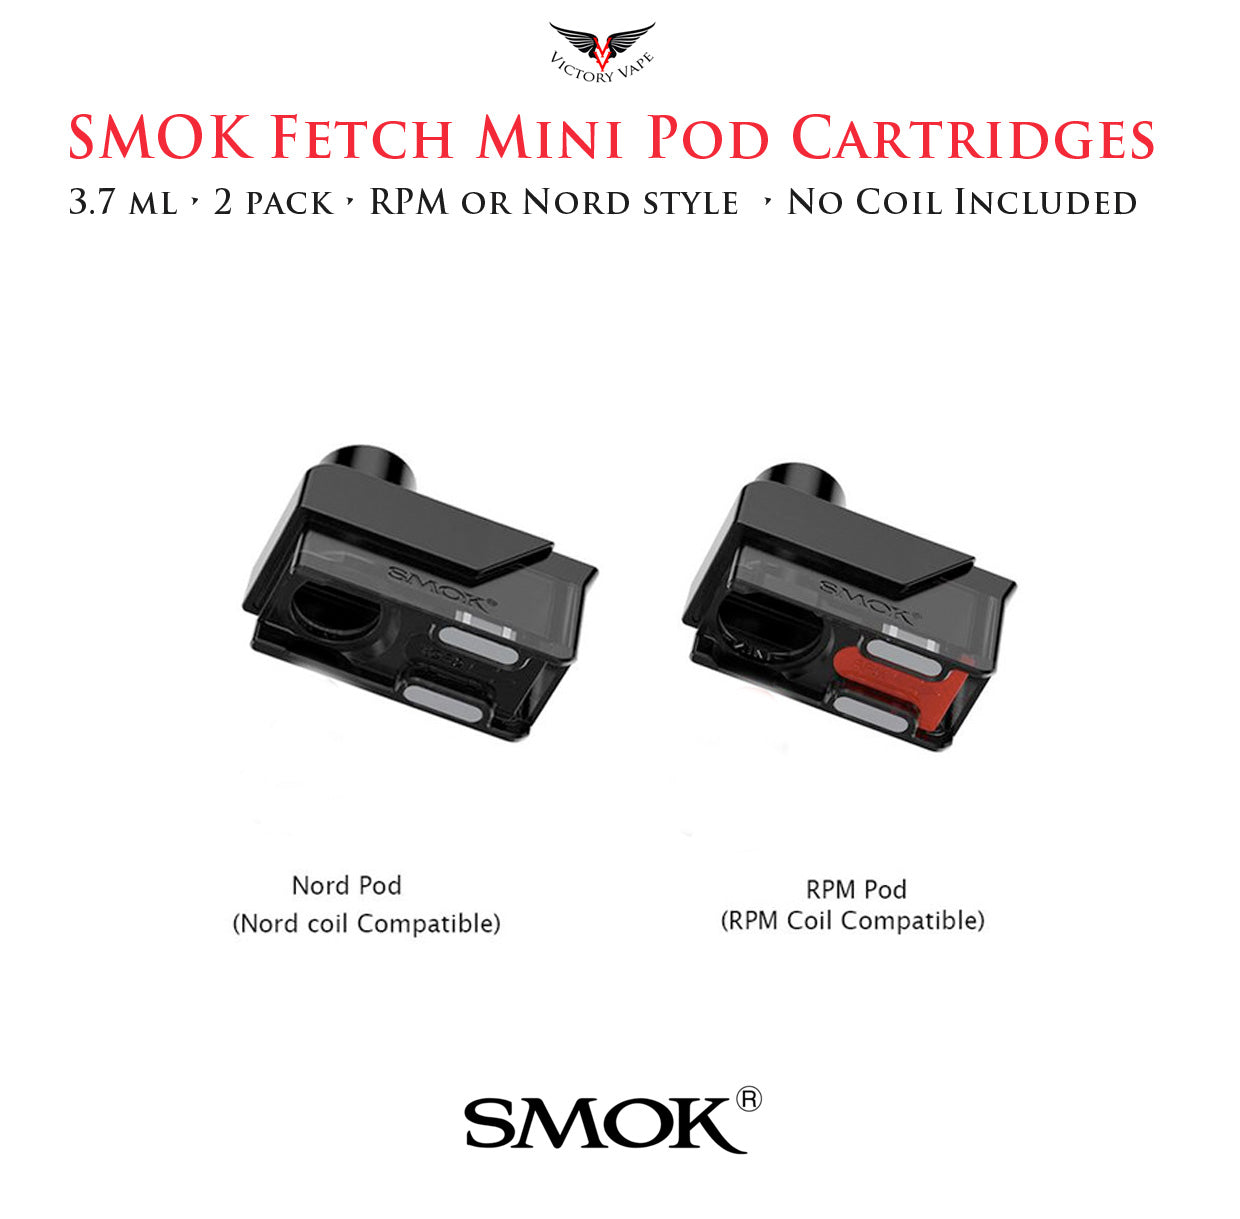  SMOK Fetch empty pod • 3.7ml 2 pack 